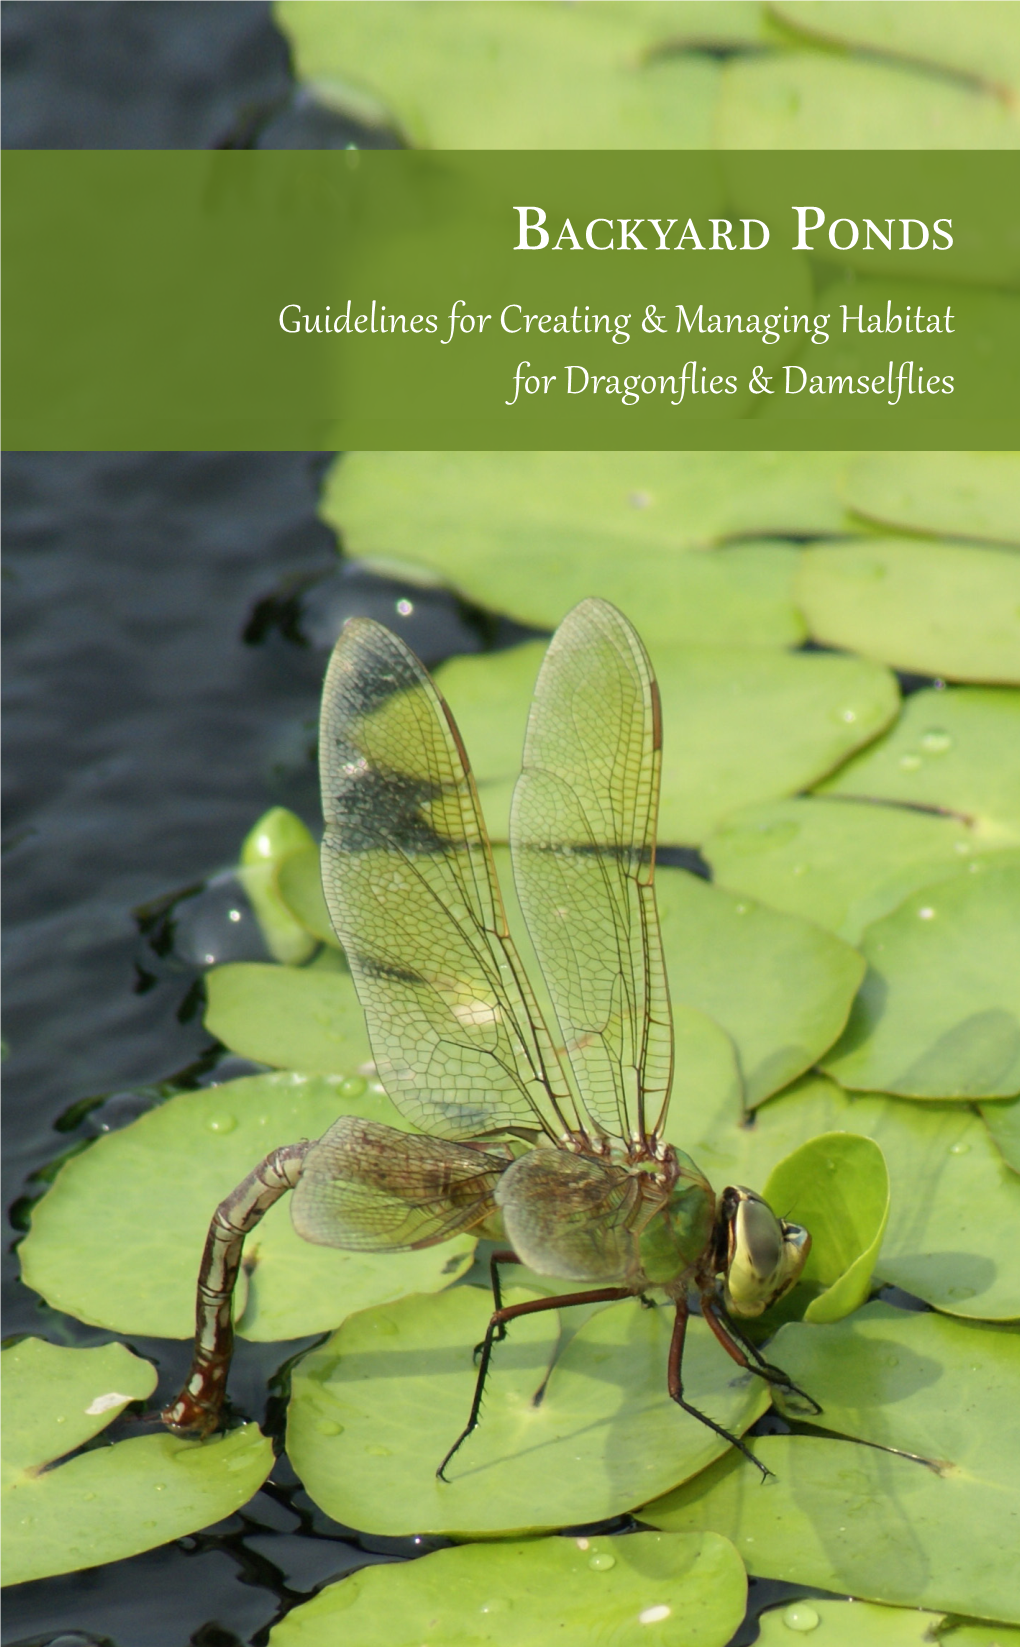 Guidelines for Creating & Managing Habitat for Dragonflies & Damselflies